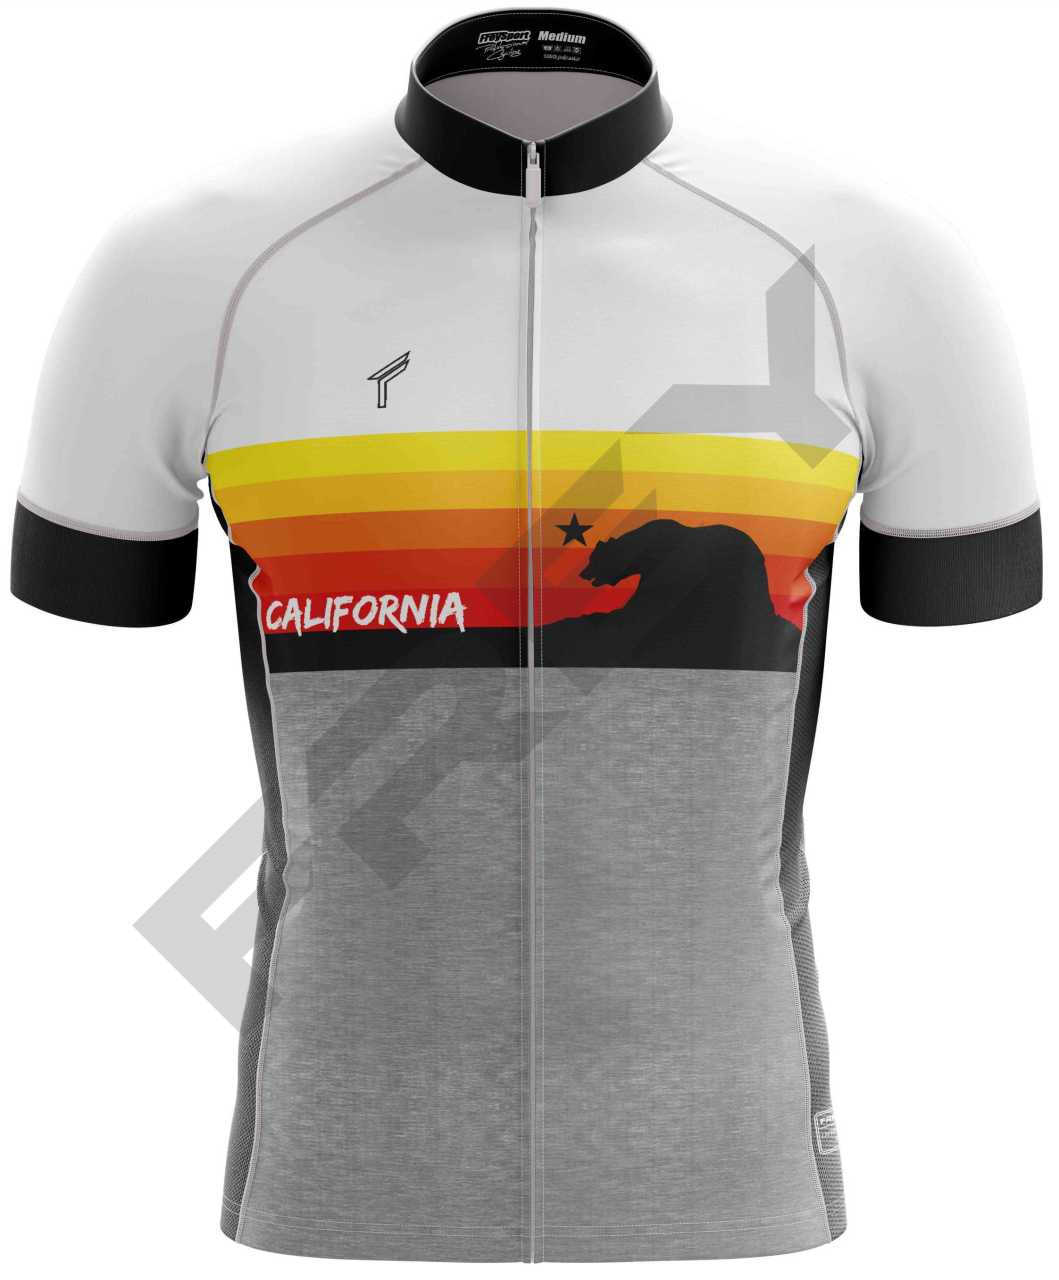 Freysport California Bisiklet Forması